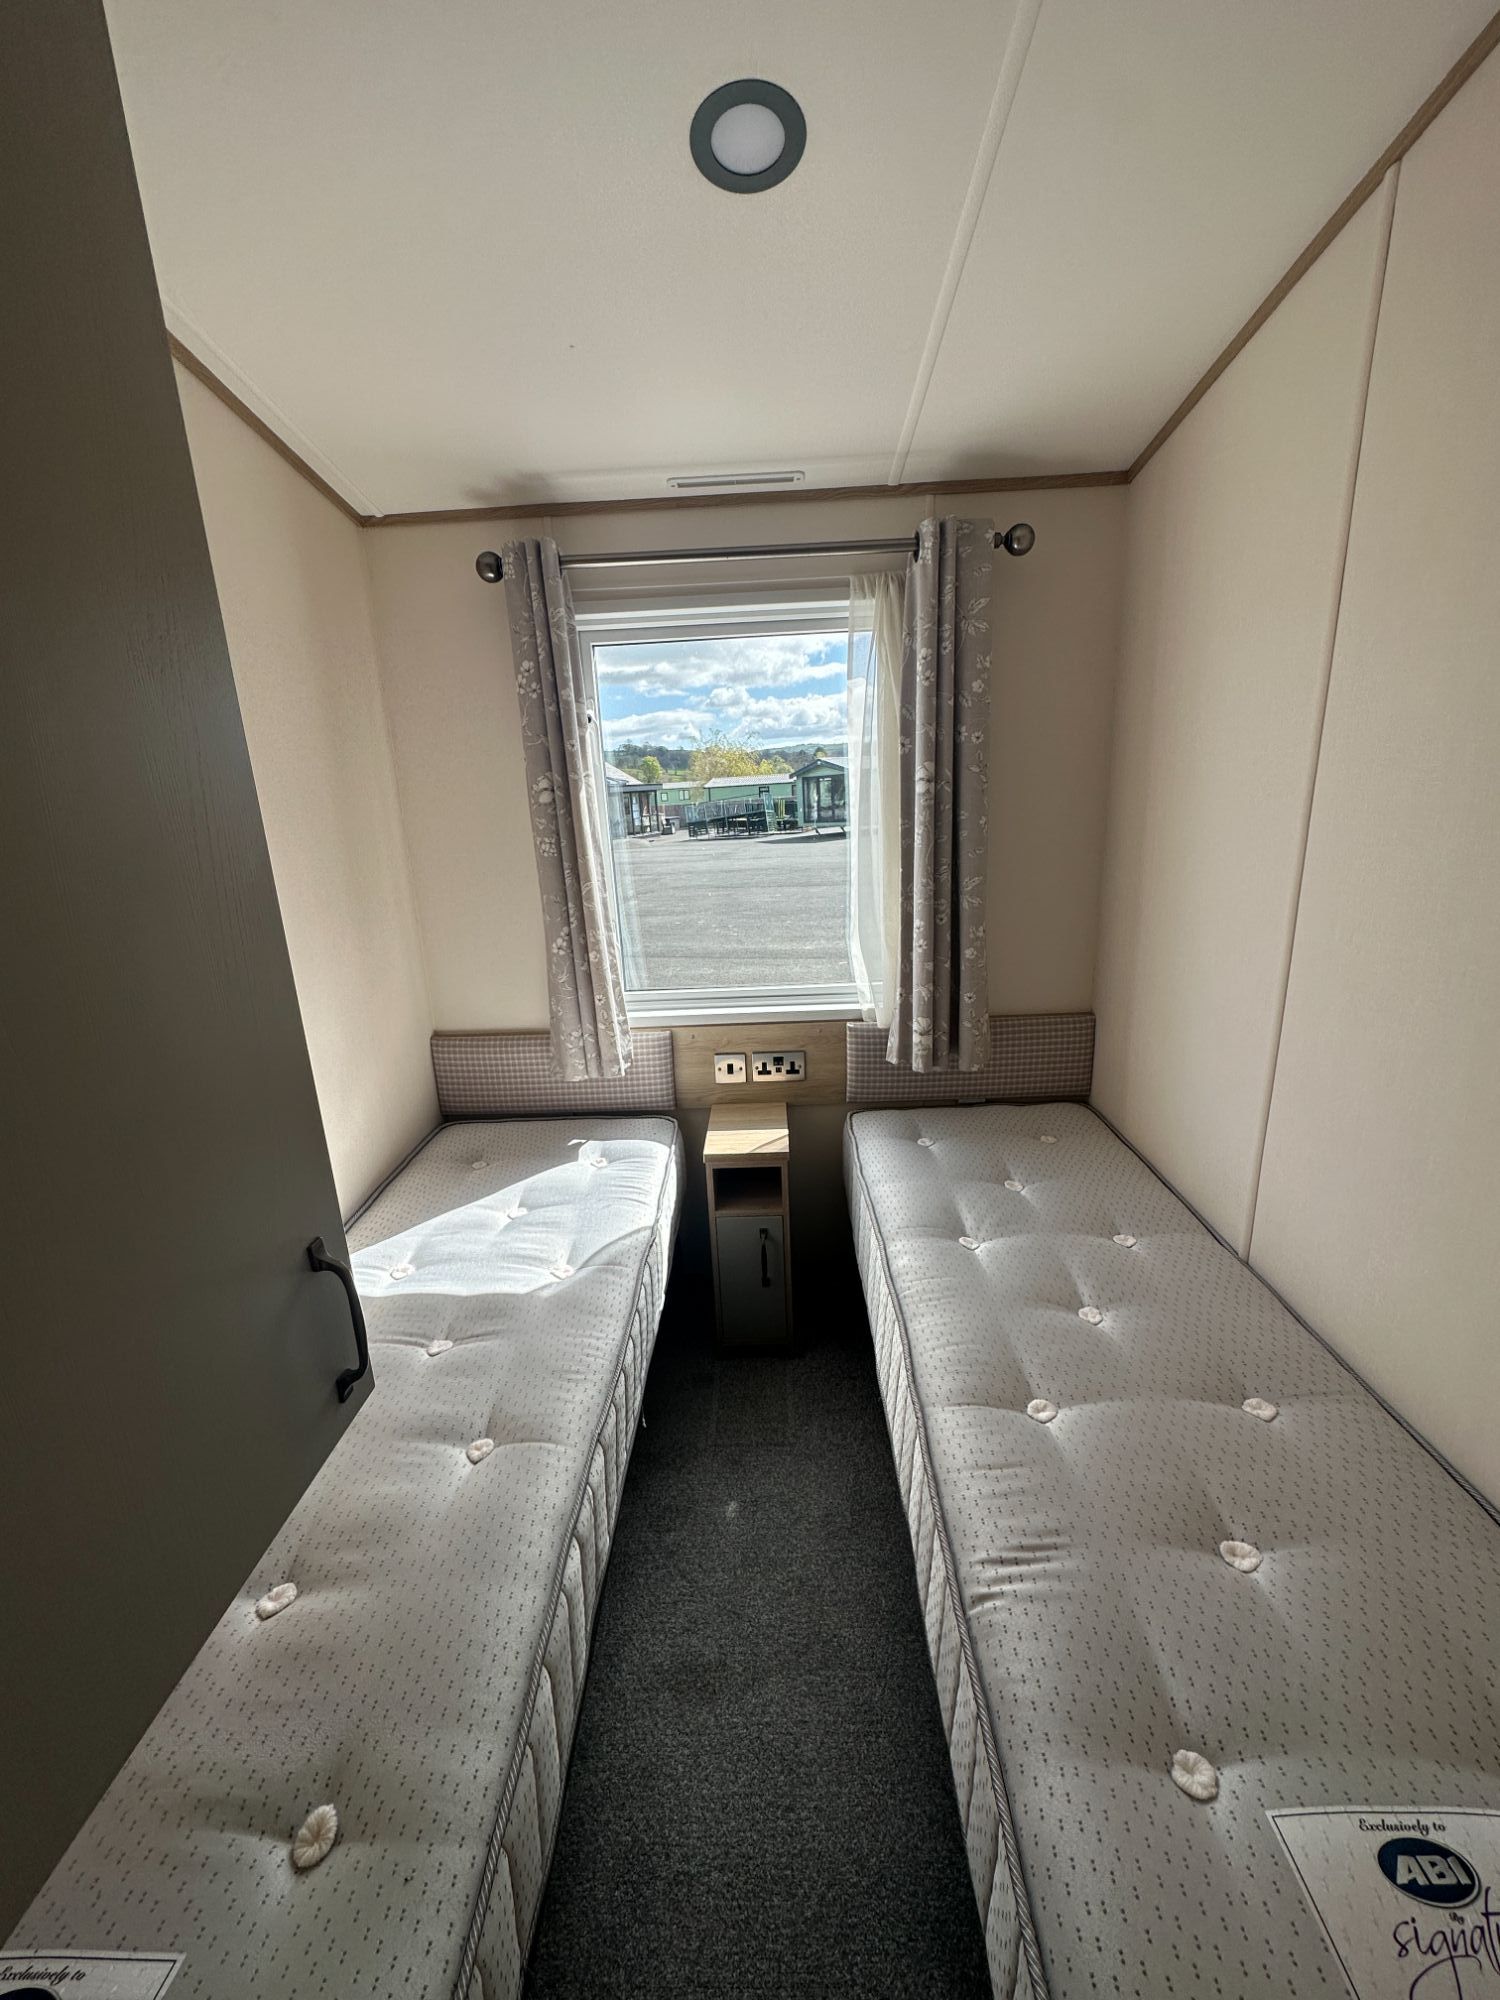 2021 ABI Holiday Lodge Twin Bedroom 1